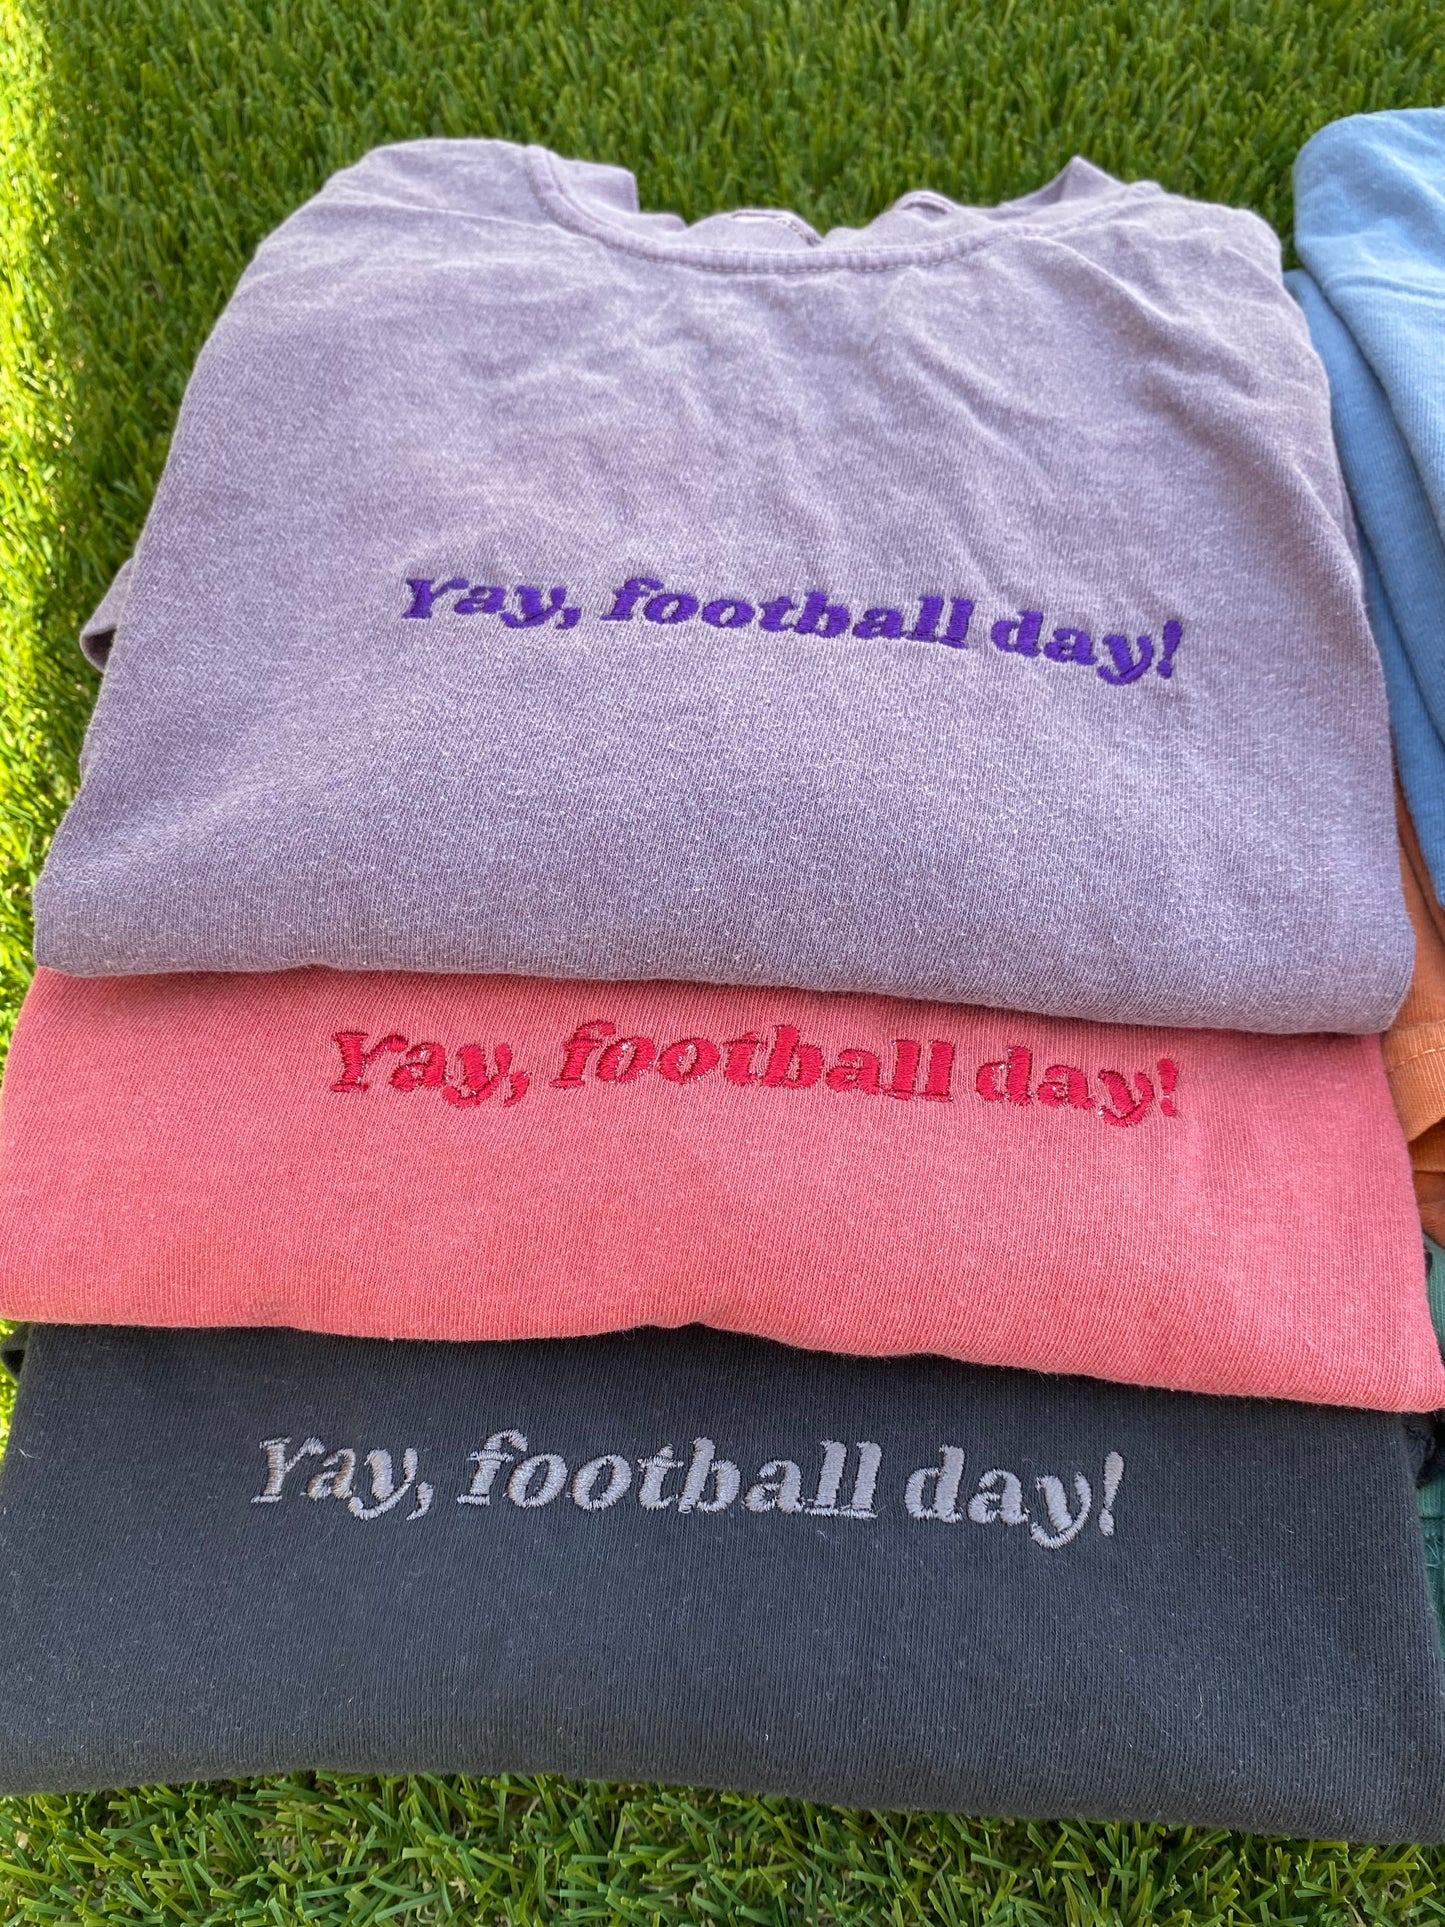 Yay, football day! T-shirt (SIX colors)